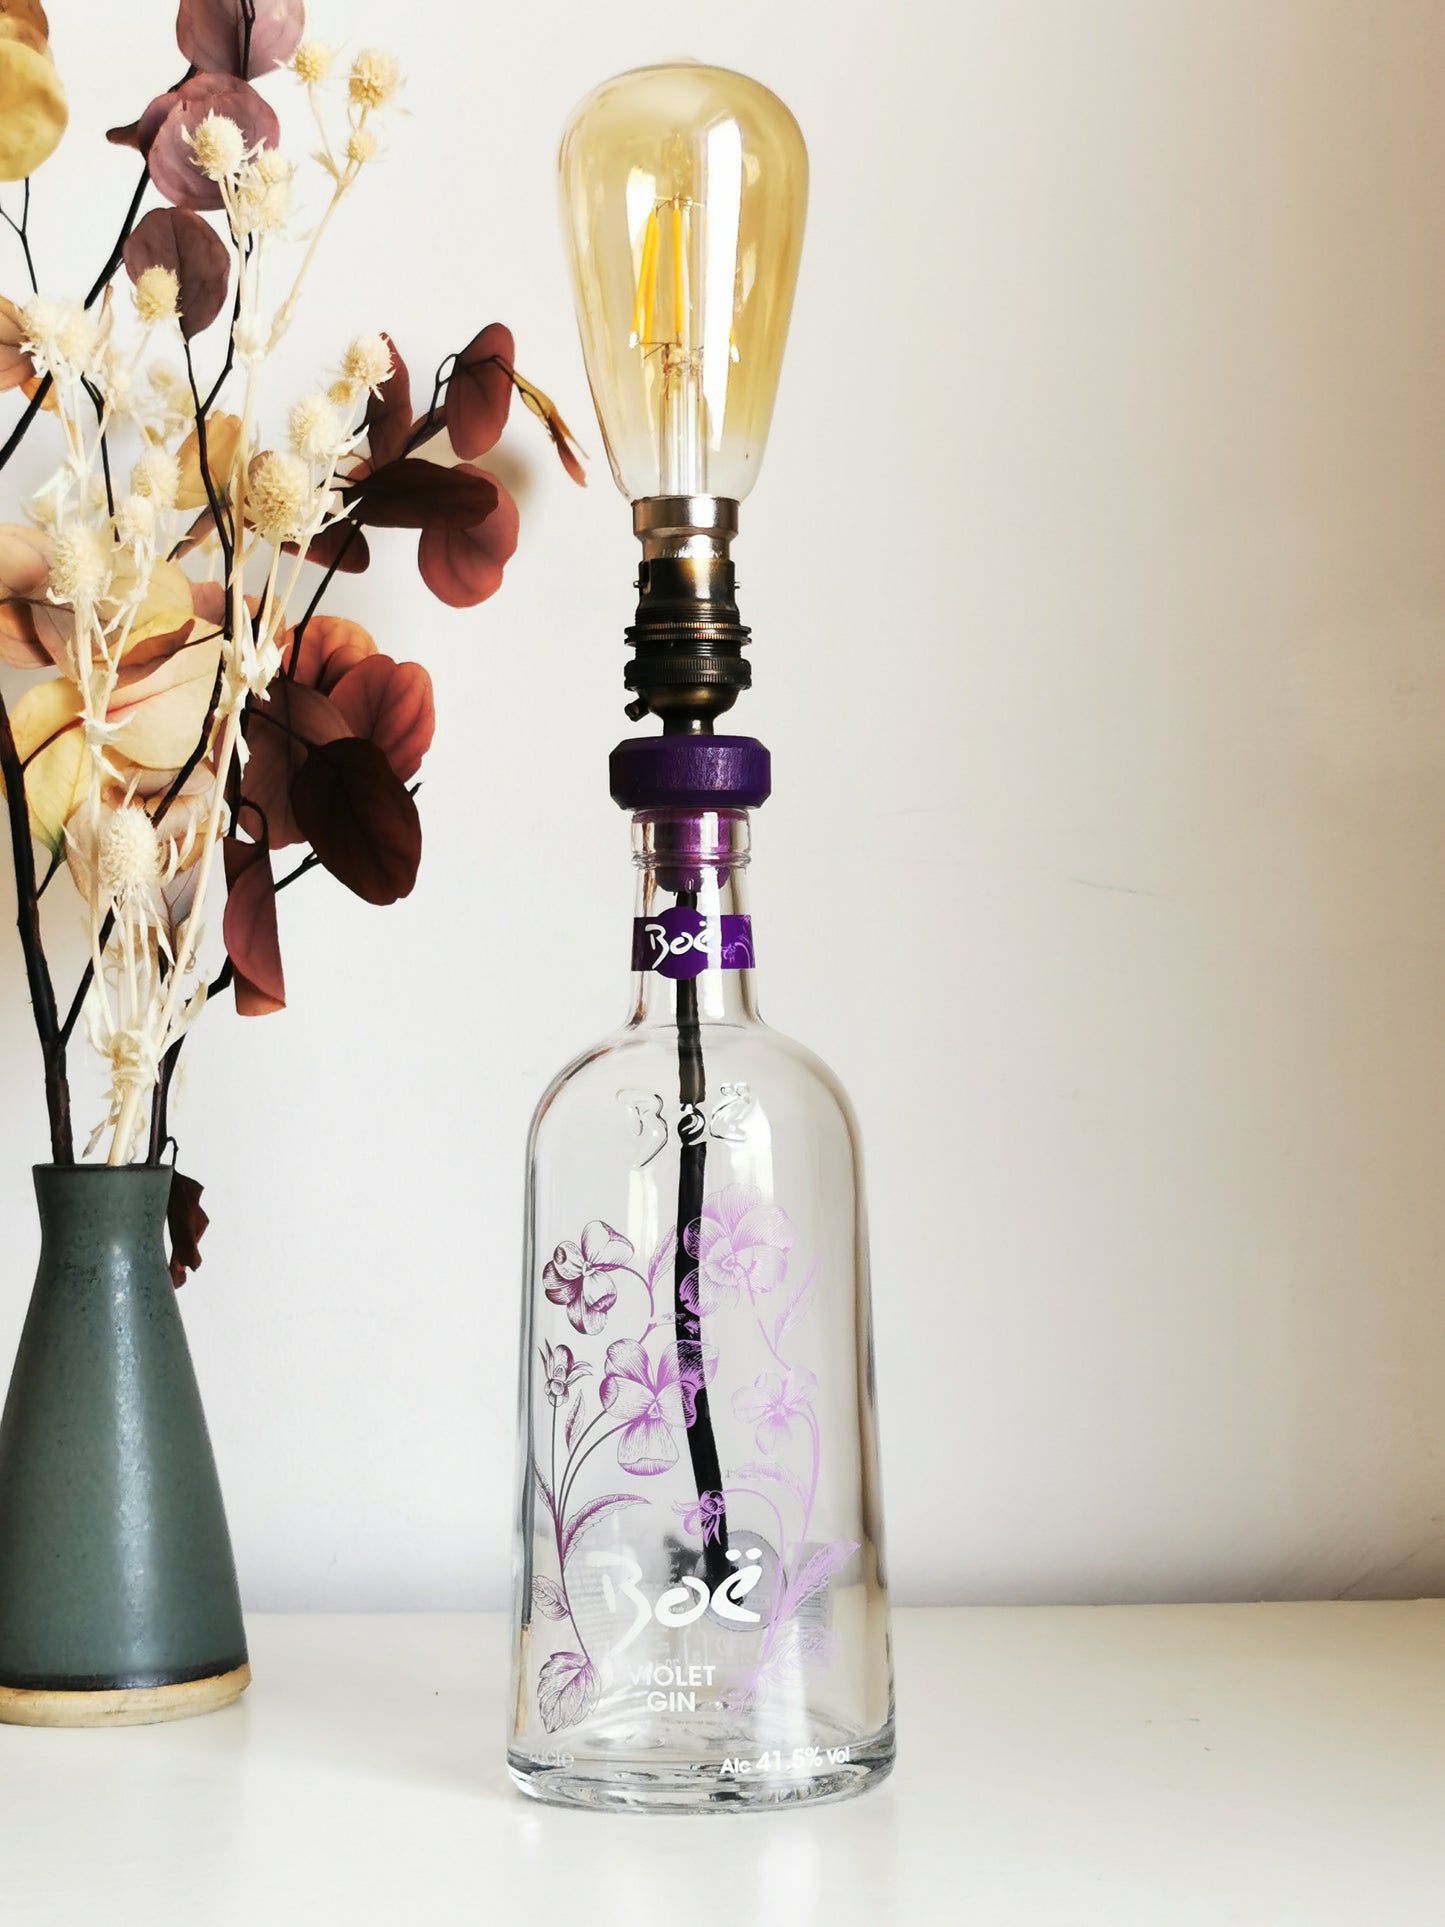 Boe Violet Gin Bottle Table Lamp